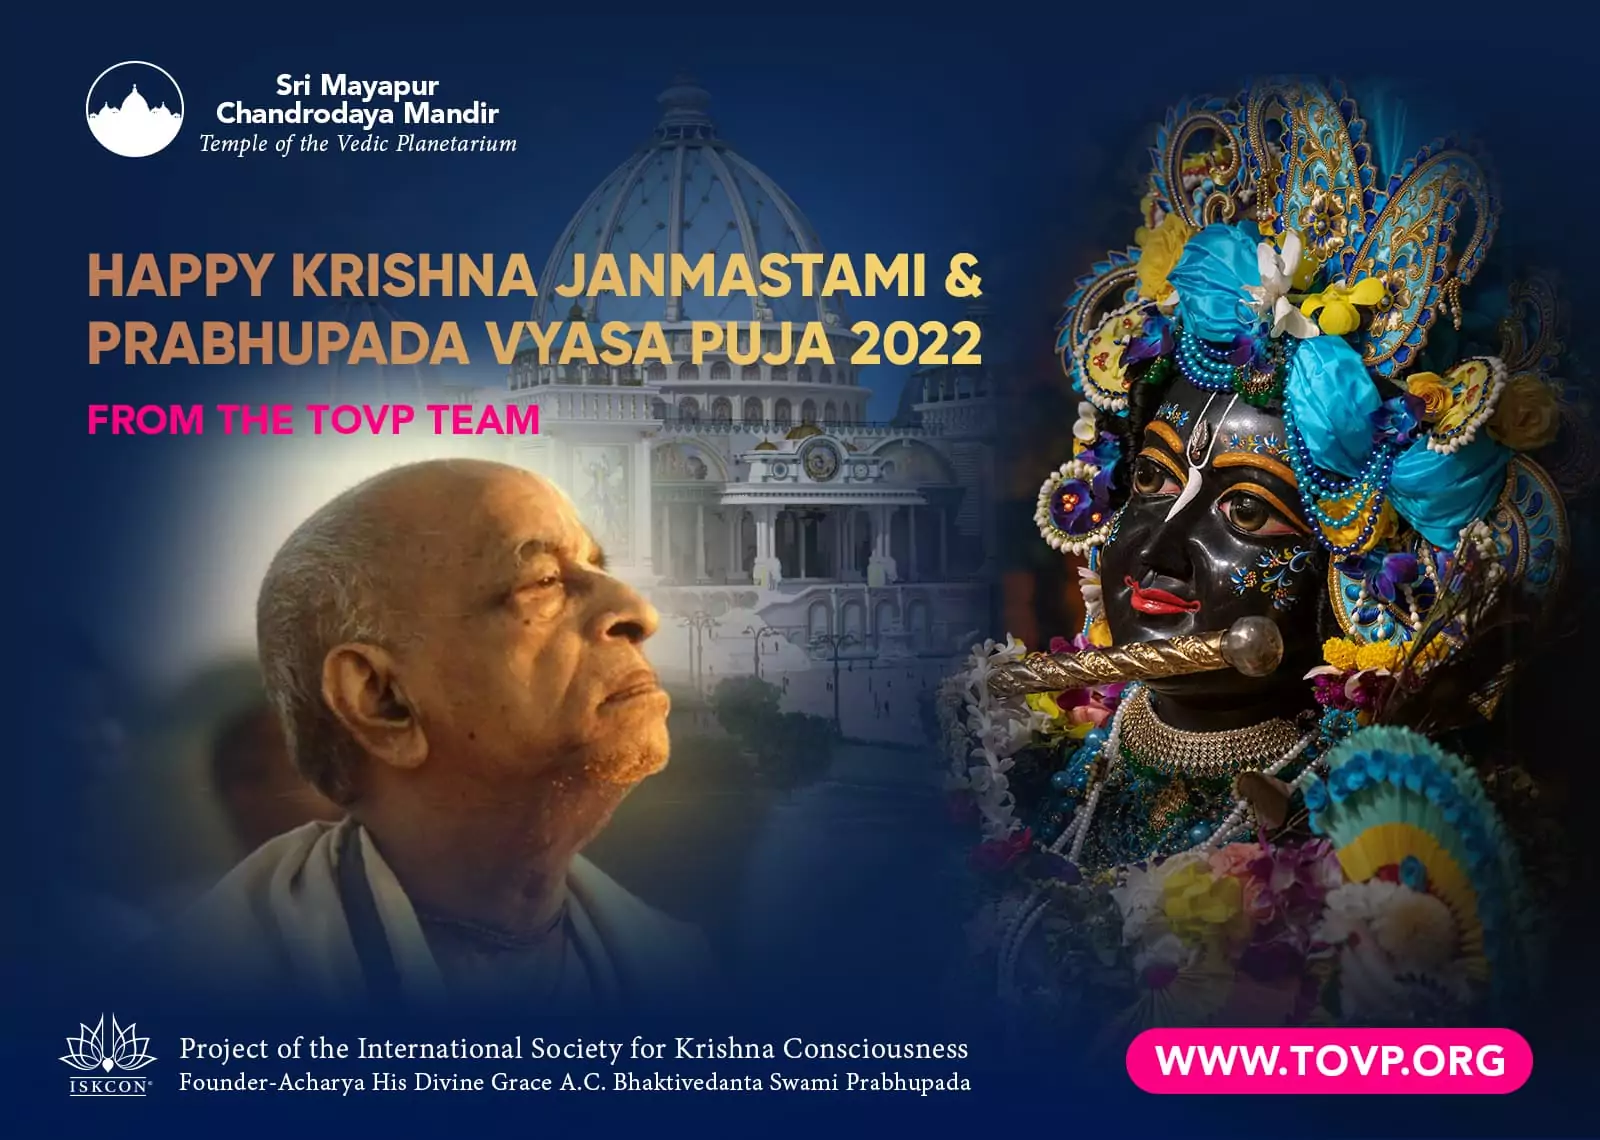 Happy Krishna Janmastami and Prabhupada Vyasa Puja 2022 from the TOVP Team